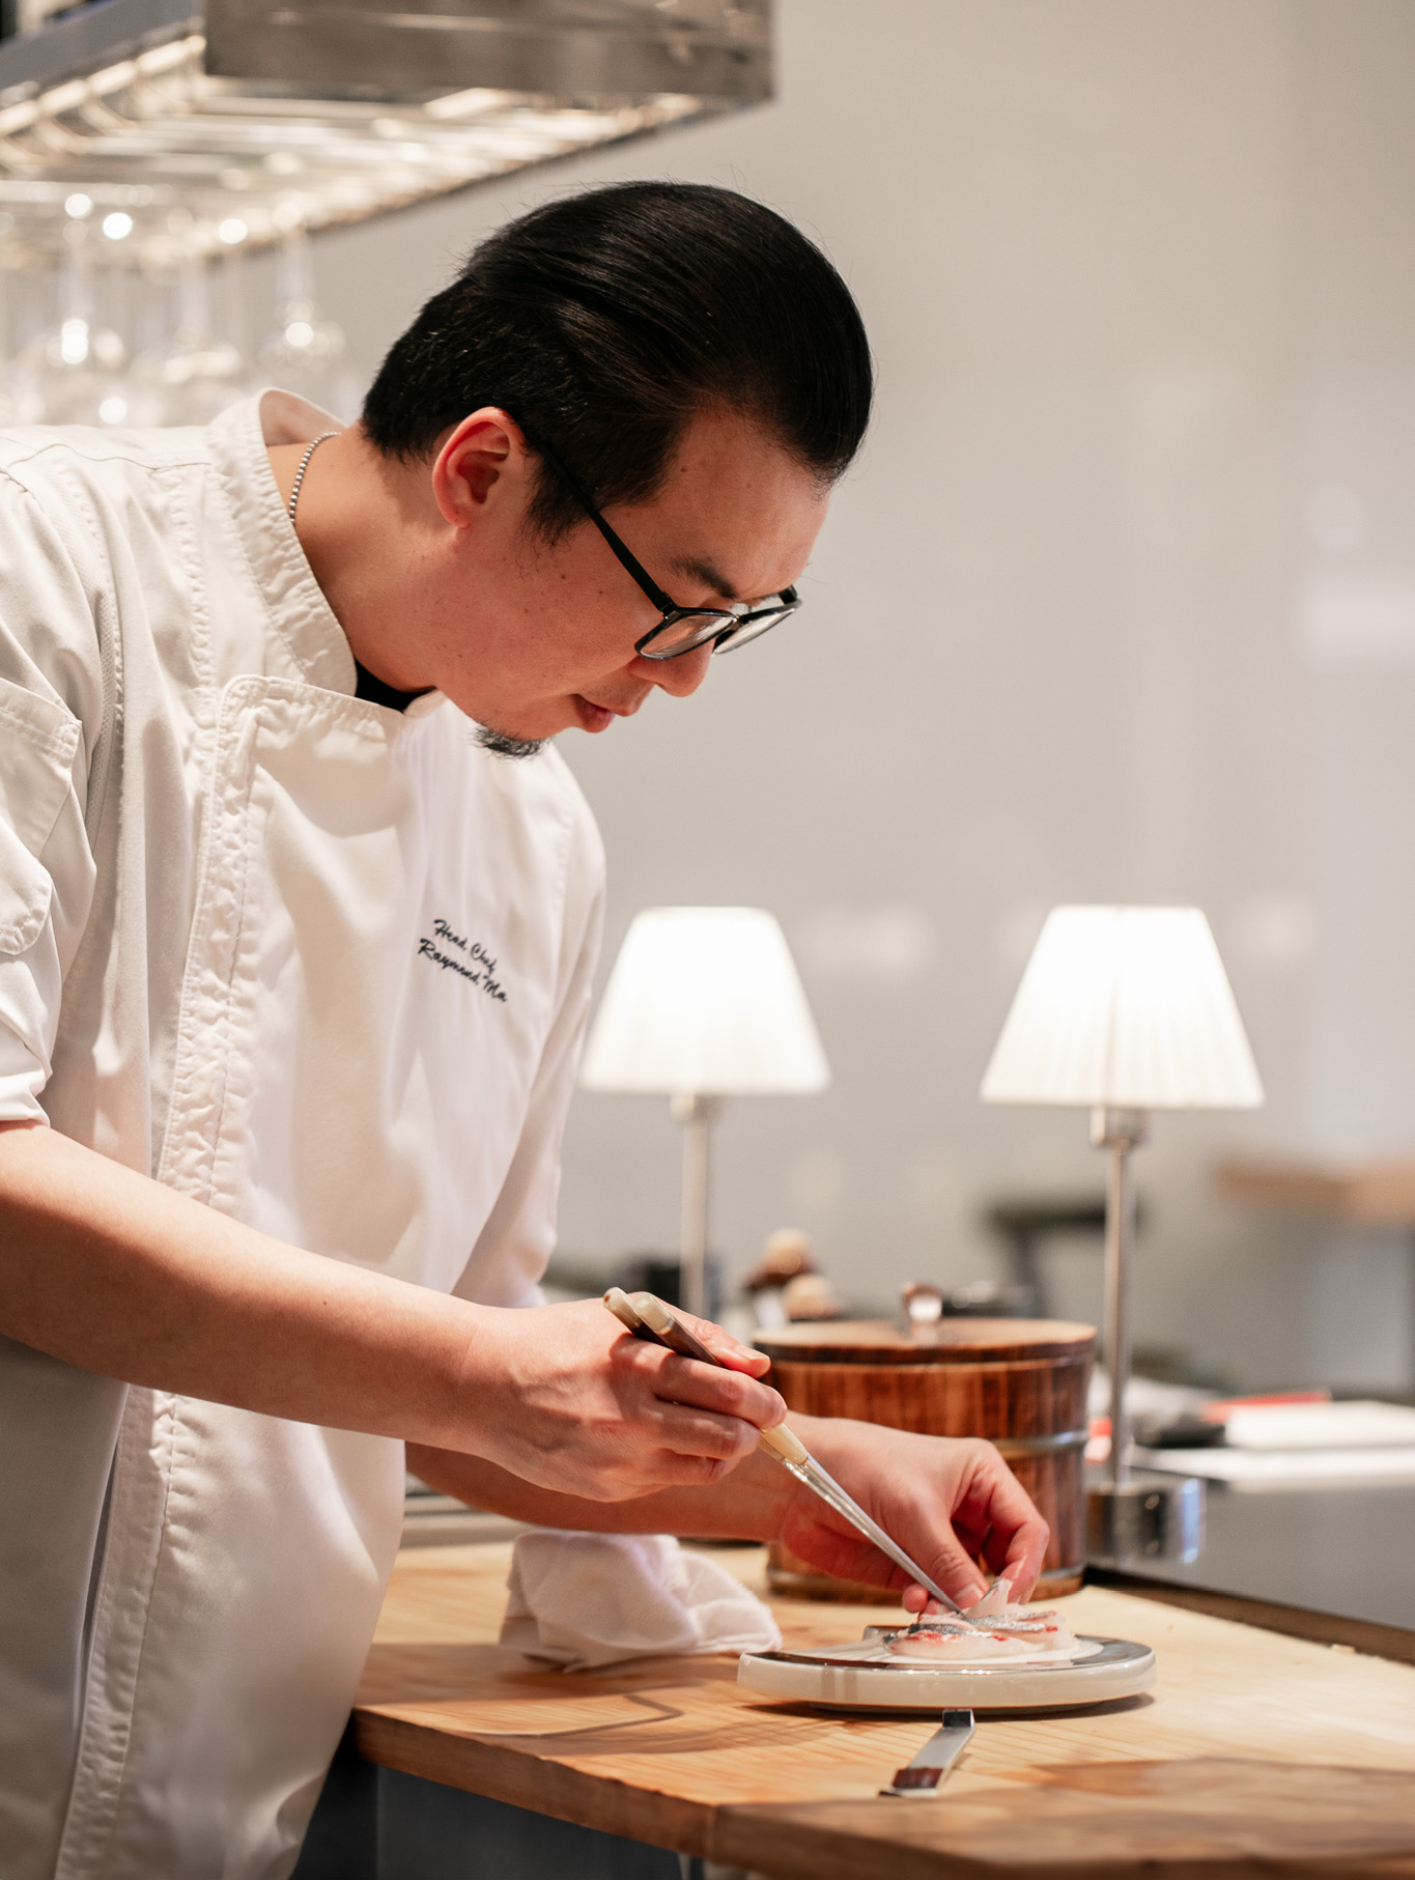 Raymond Ma, international head chef of the Aqua Restaurant Group